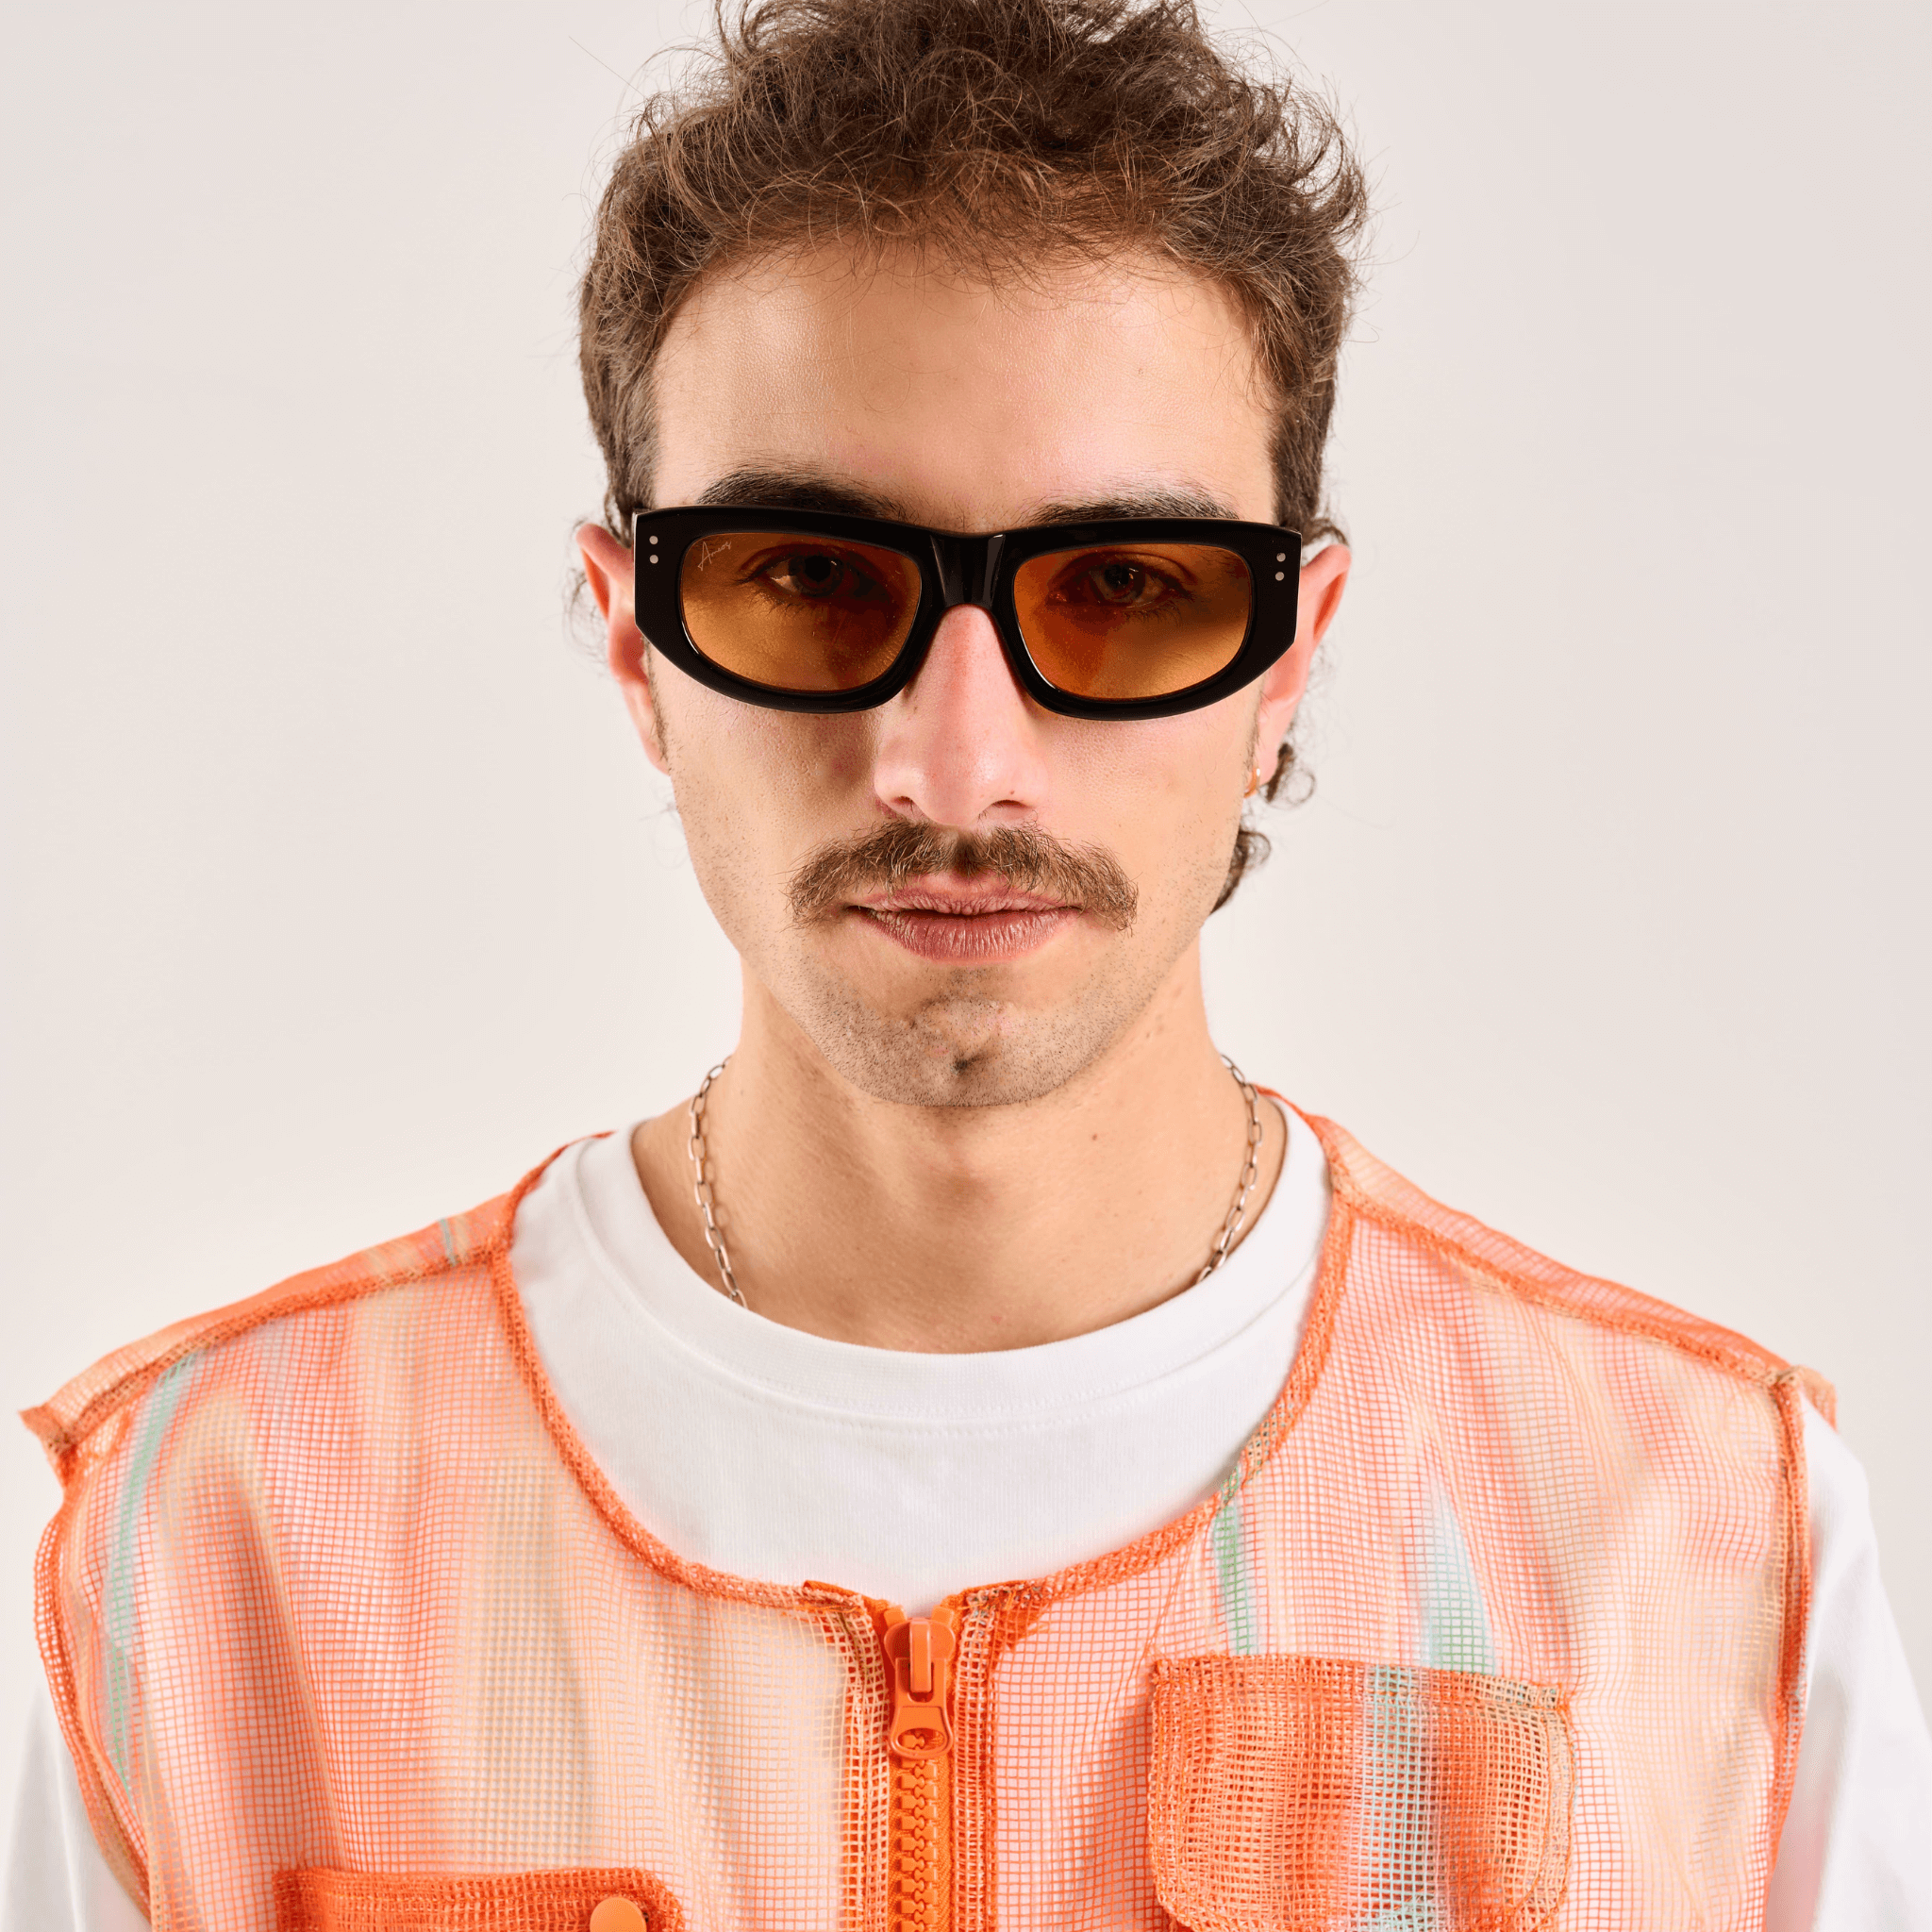 Ameos Forever collection Max model. Black frames with orange lenses. Genderless, gender neutral eyewear